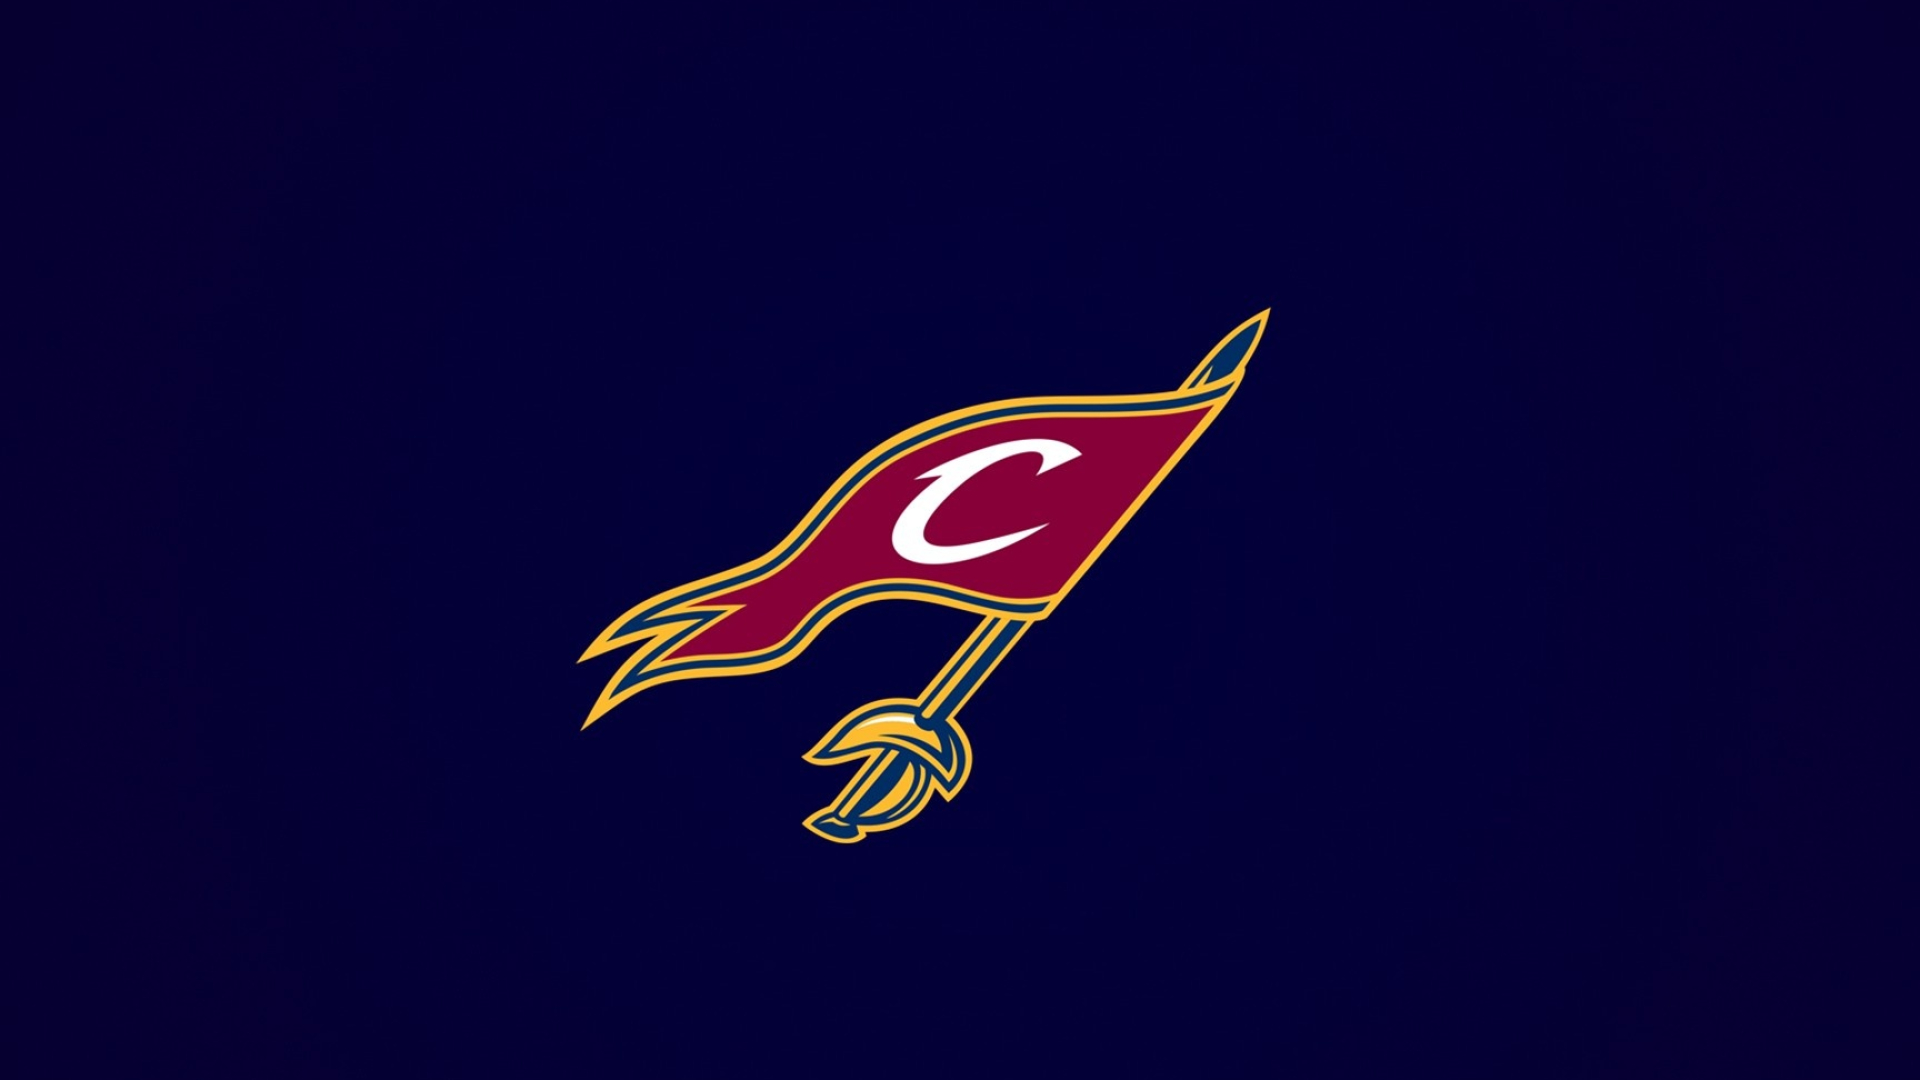 Cleveland Cavaliers: The team had their second 57-win season in 1991–92 NBA season. 1920x1080 Full HD Wallpaper.